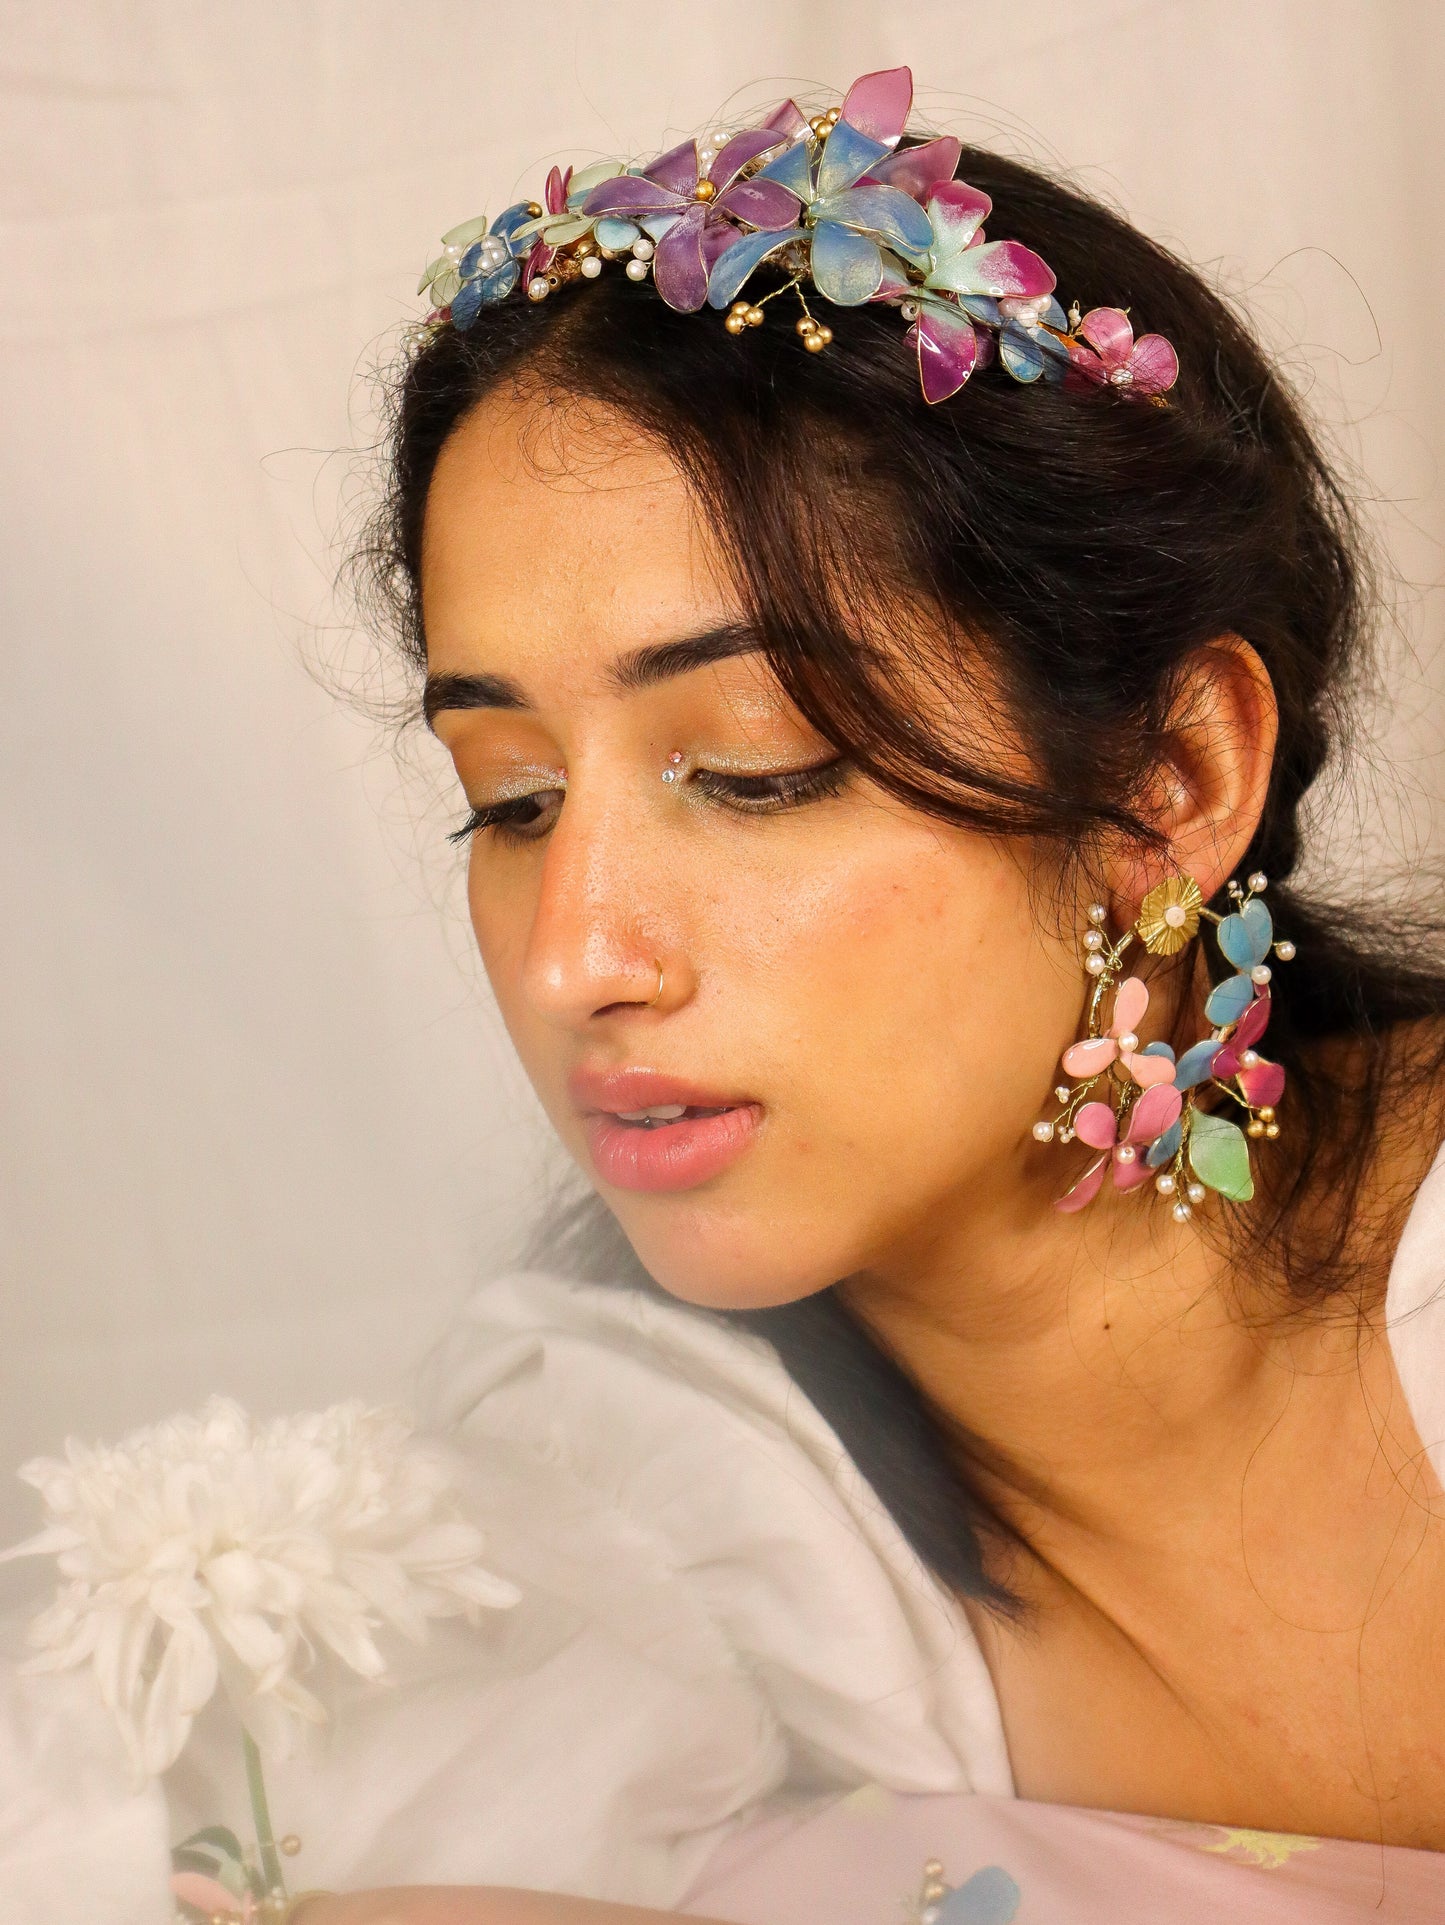 Floral Fairy Jewelry DIY Kit